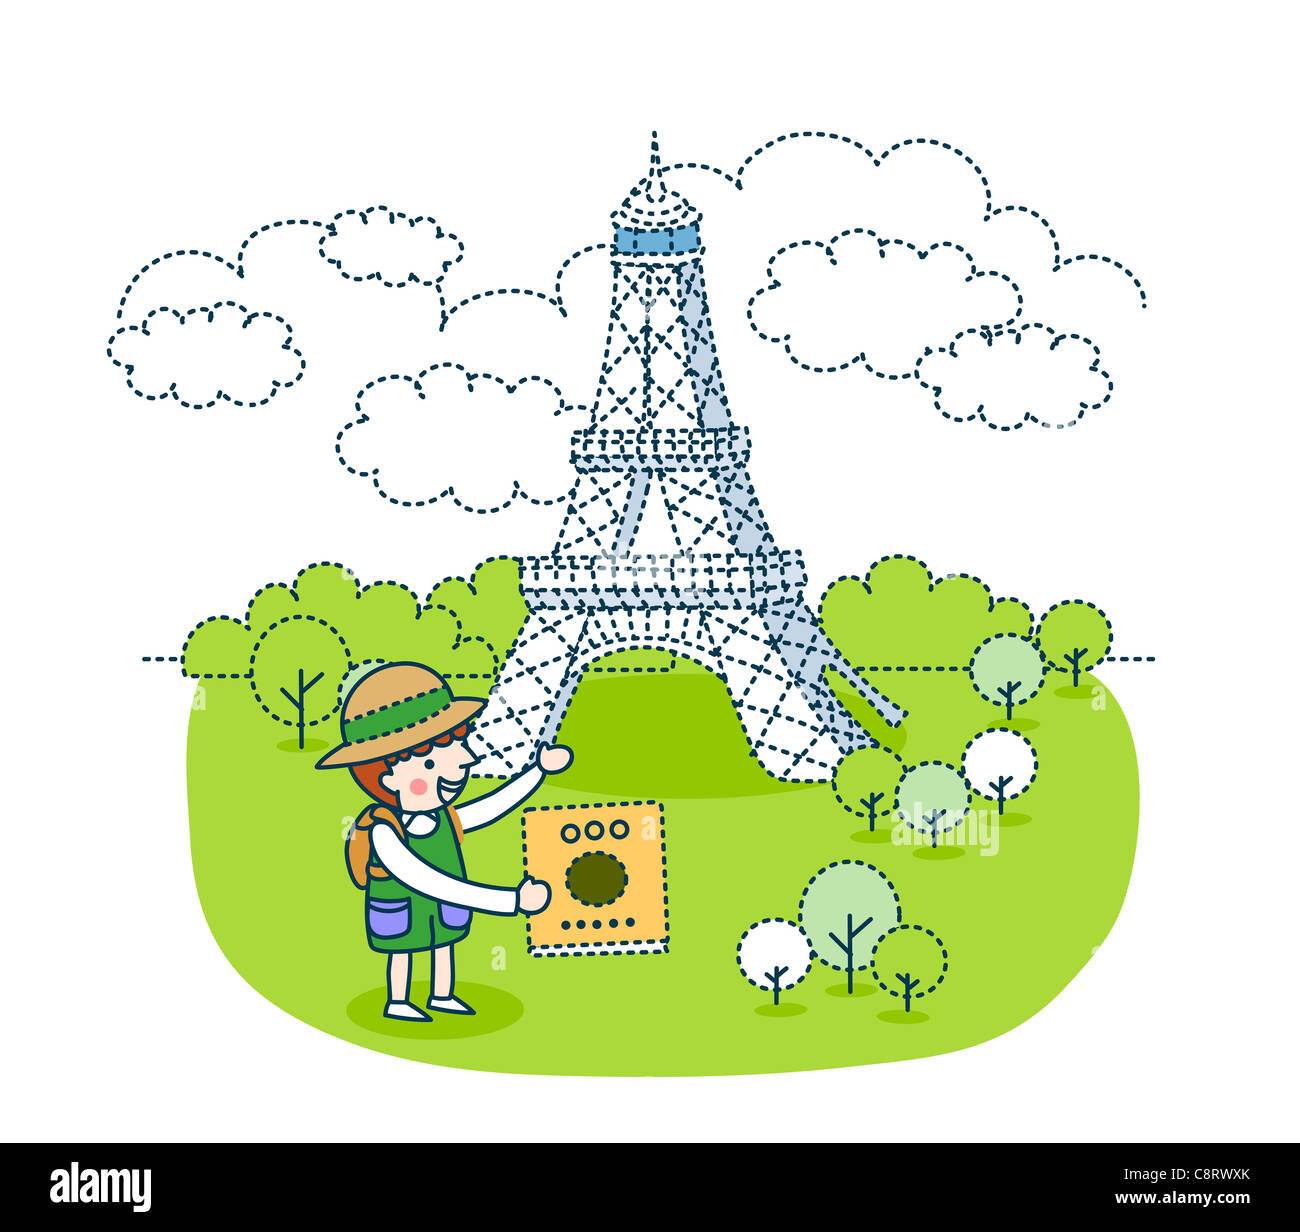 Illustration of tourist showing Eiffel Tower Stock Photo